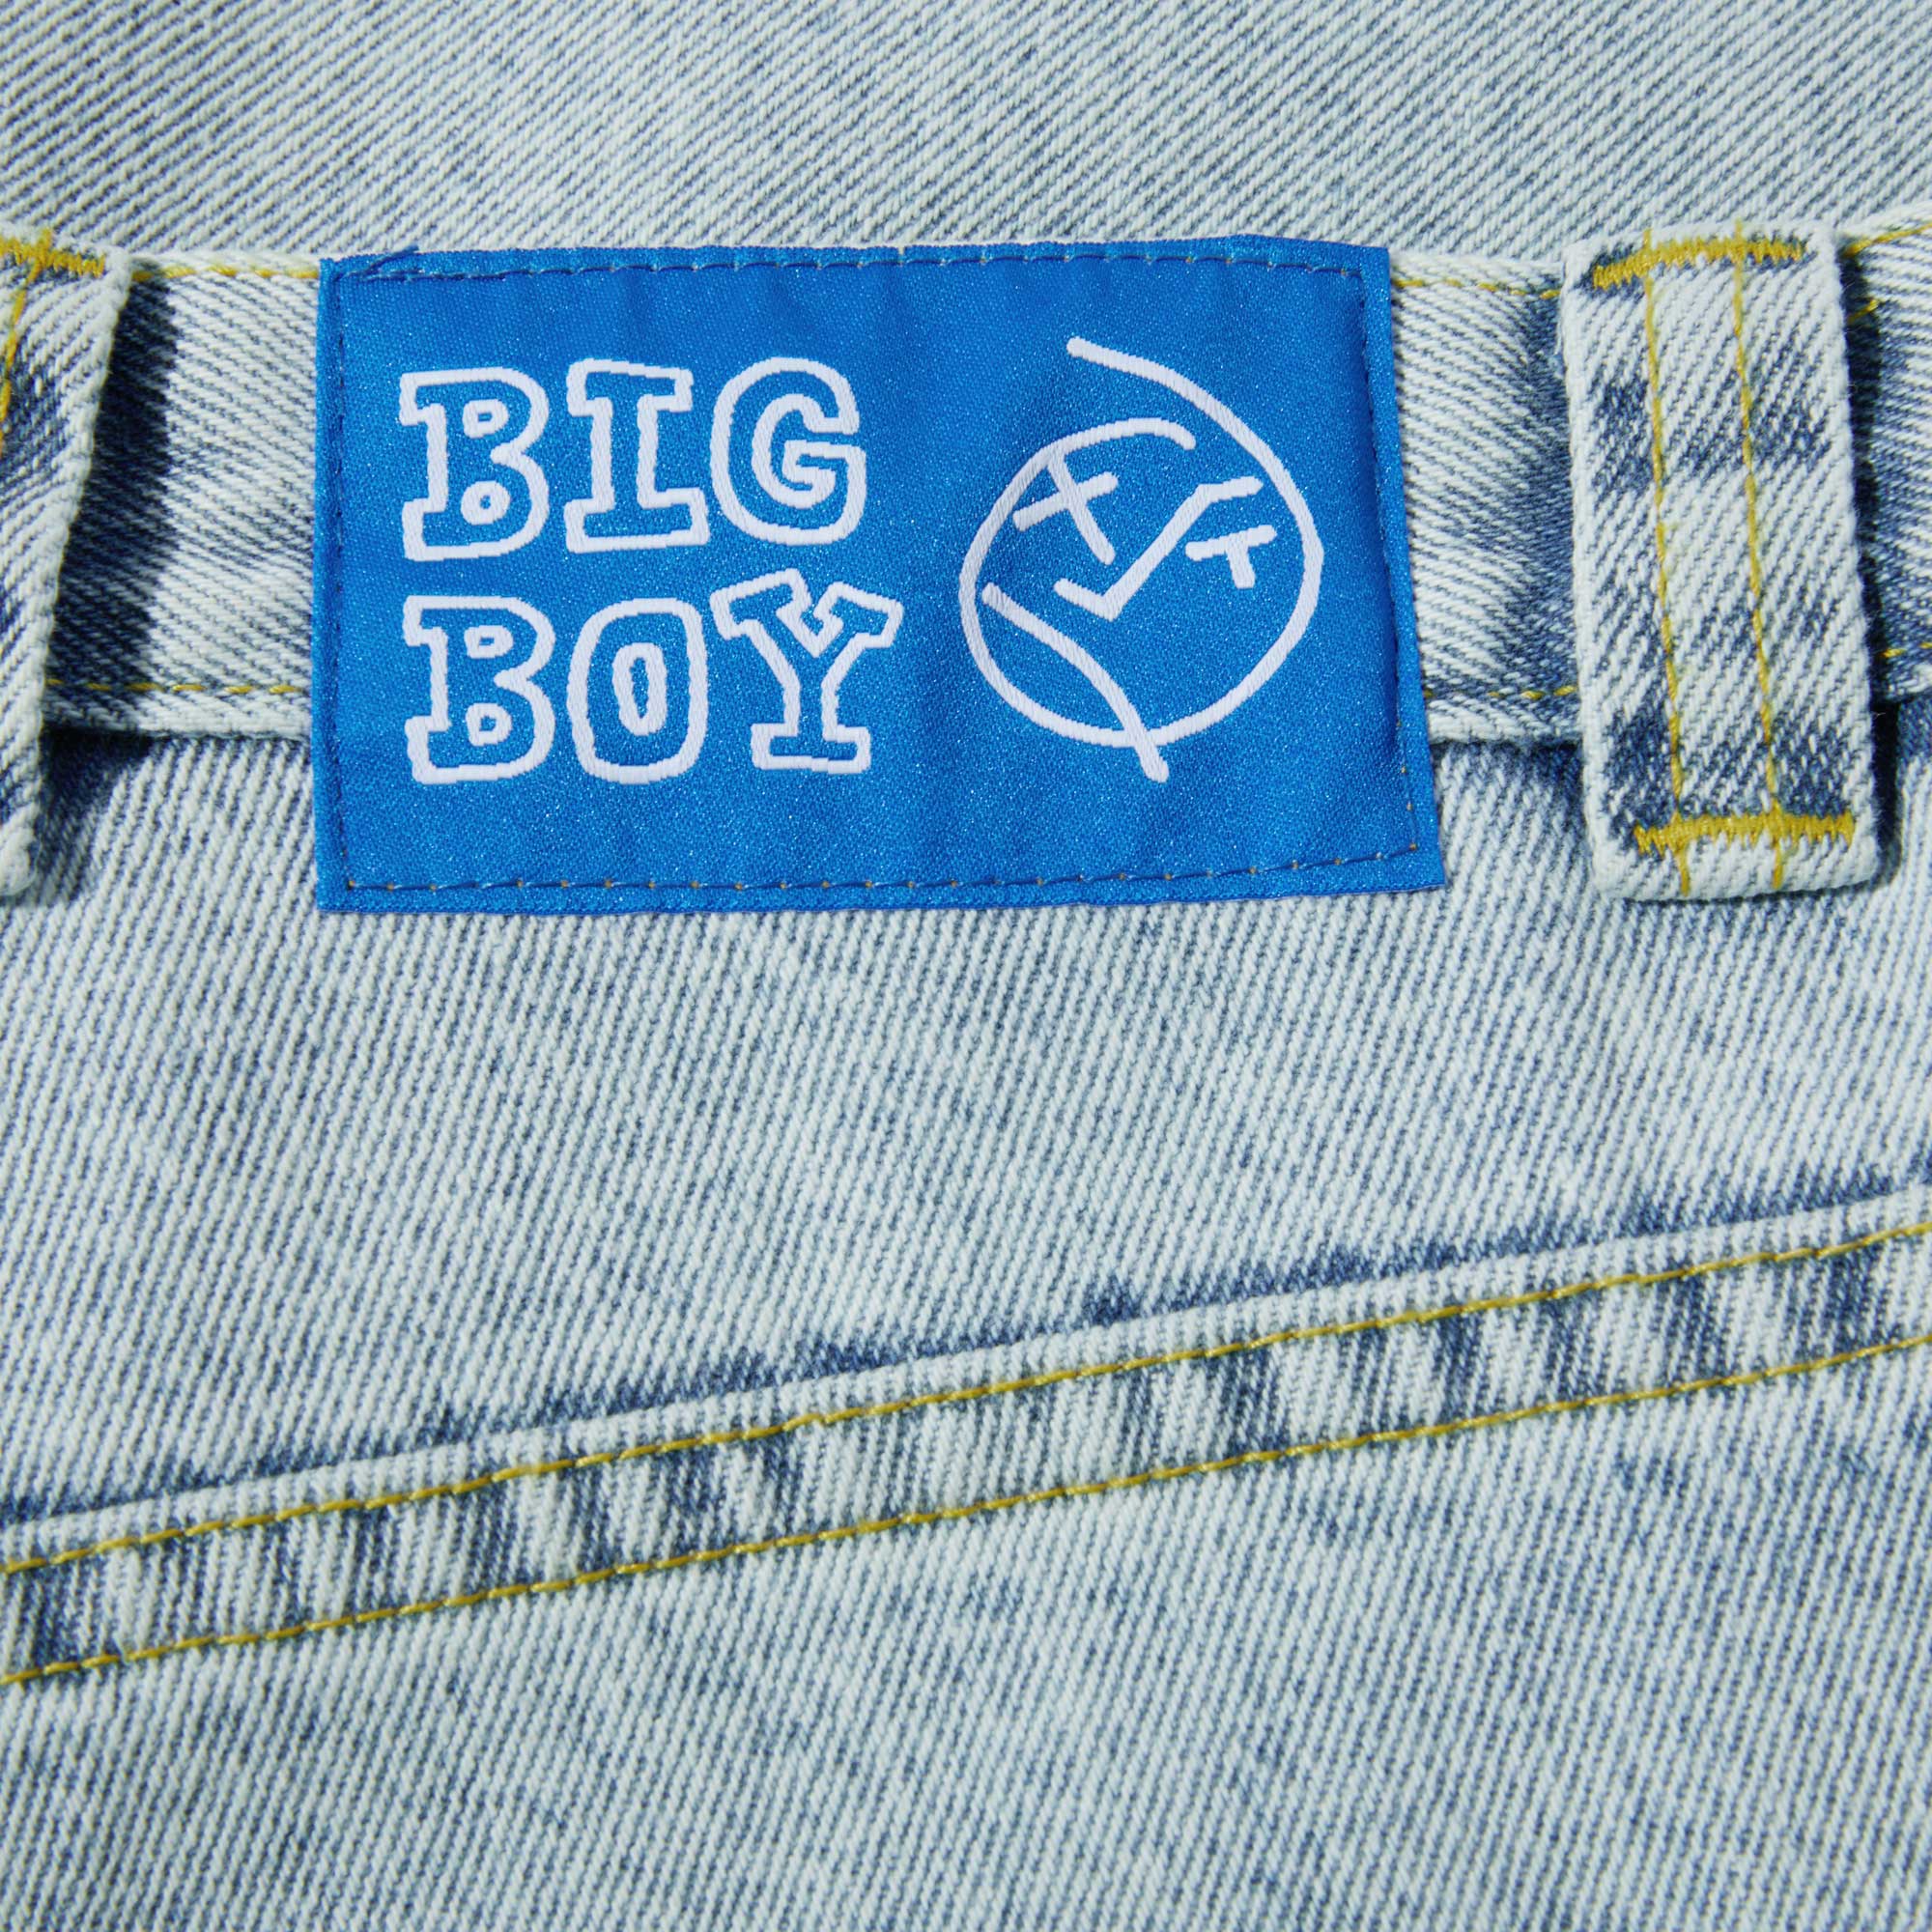 Polar Big Boy Jeans, light blue - Tiki Room Skateboards